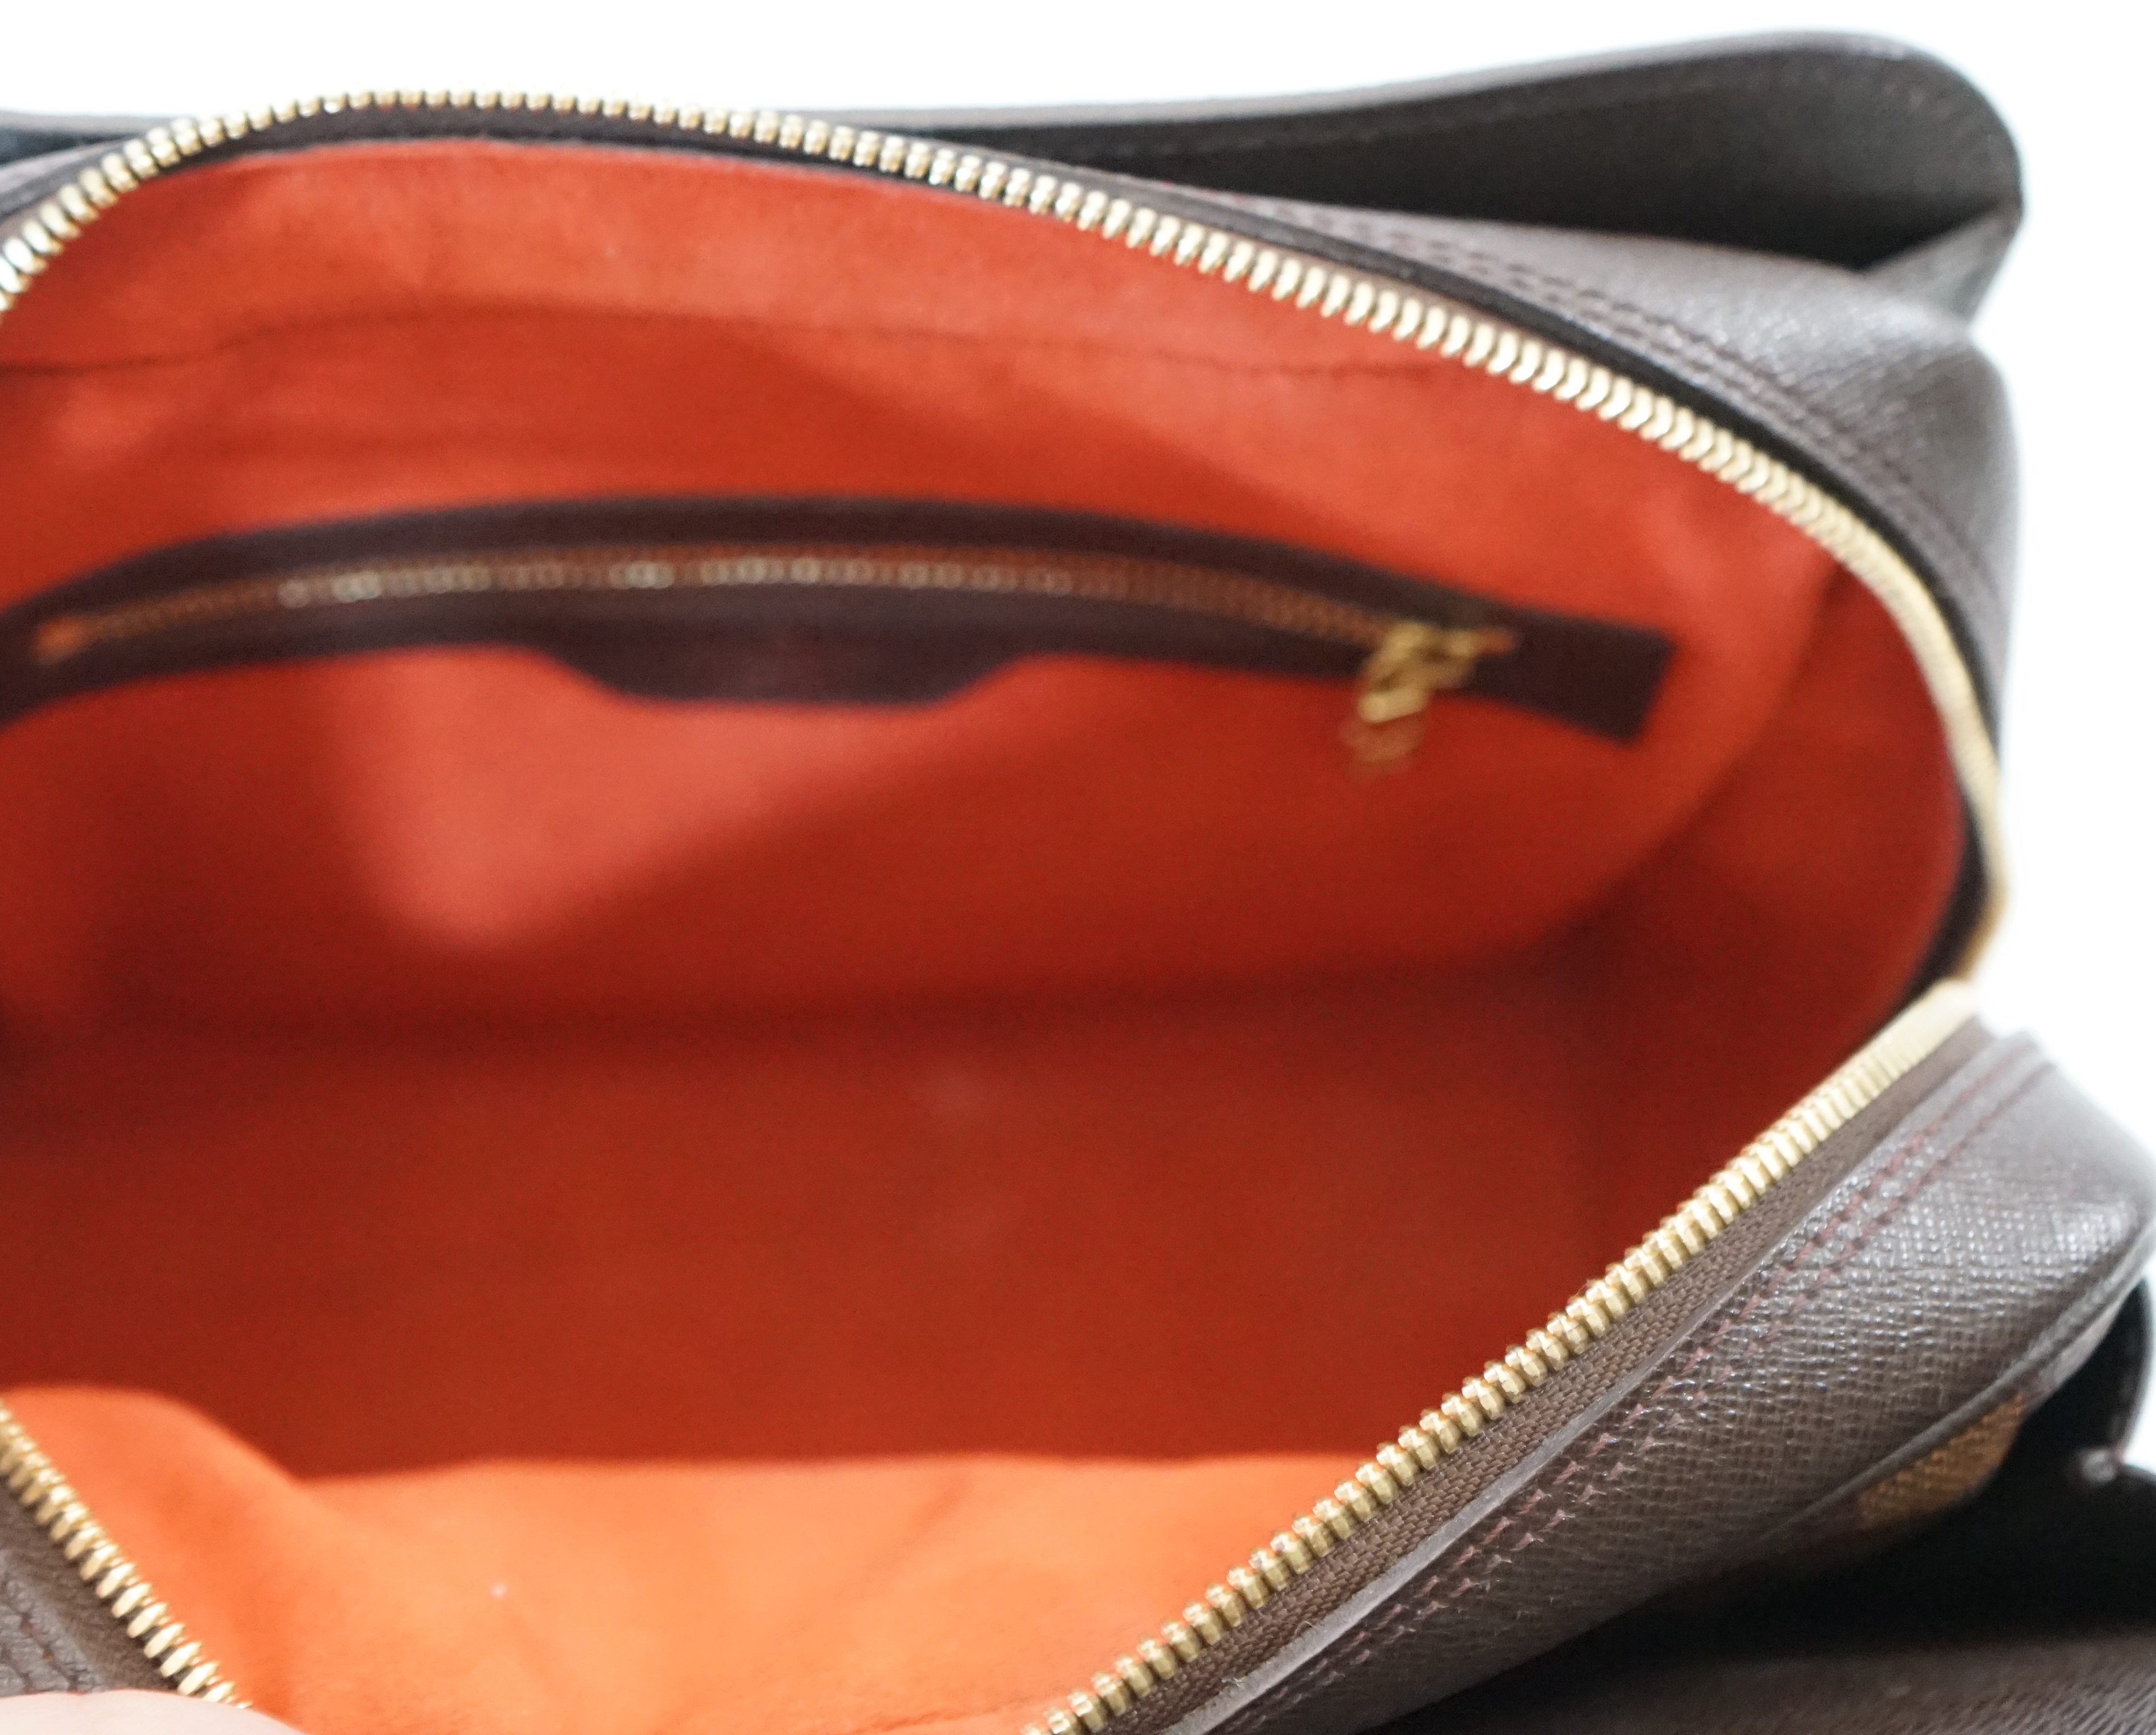 A Louis Vuitton Triana handbag, styled in Damier canvas width 26cm, depth 12cm, height 22cm handle 11cm